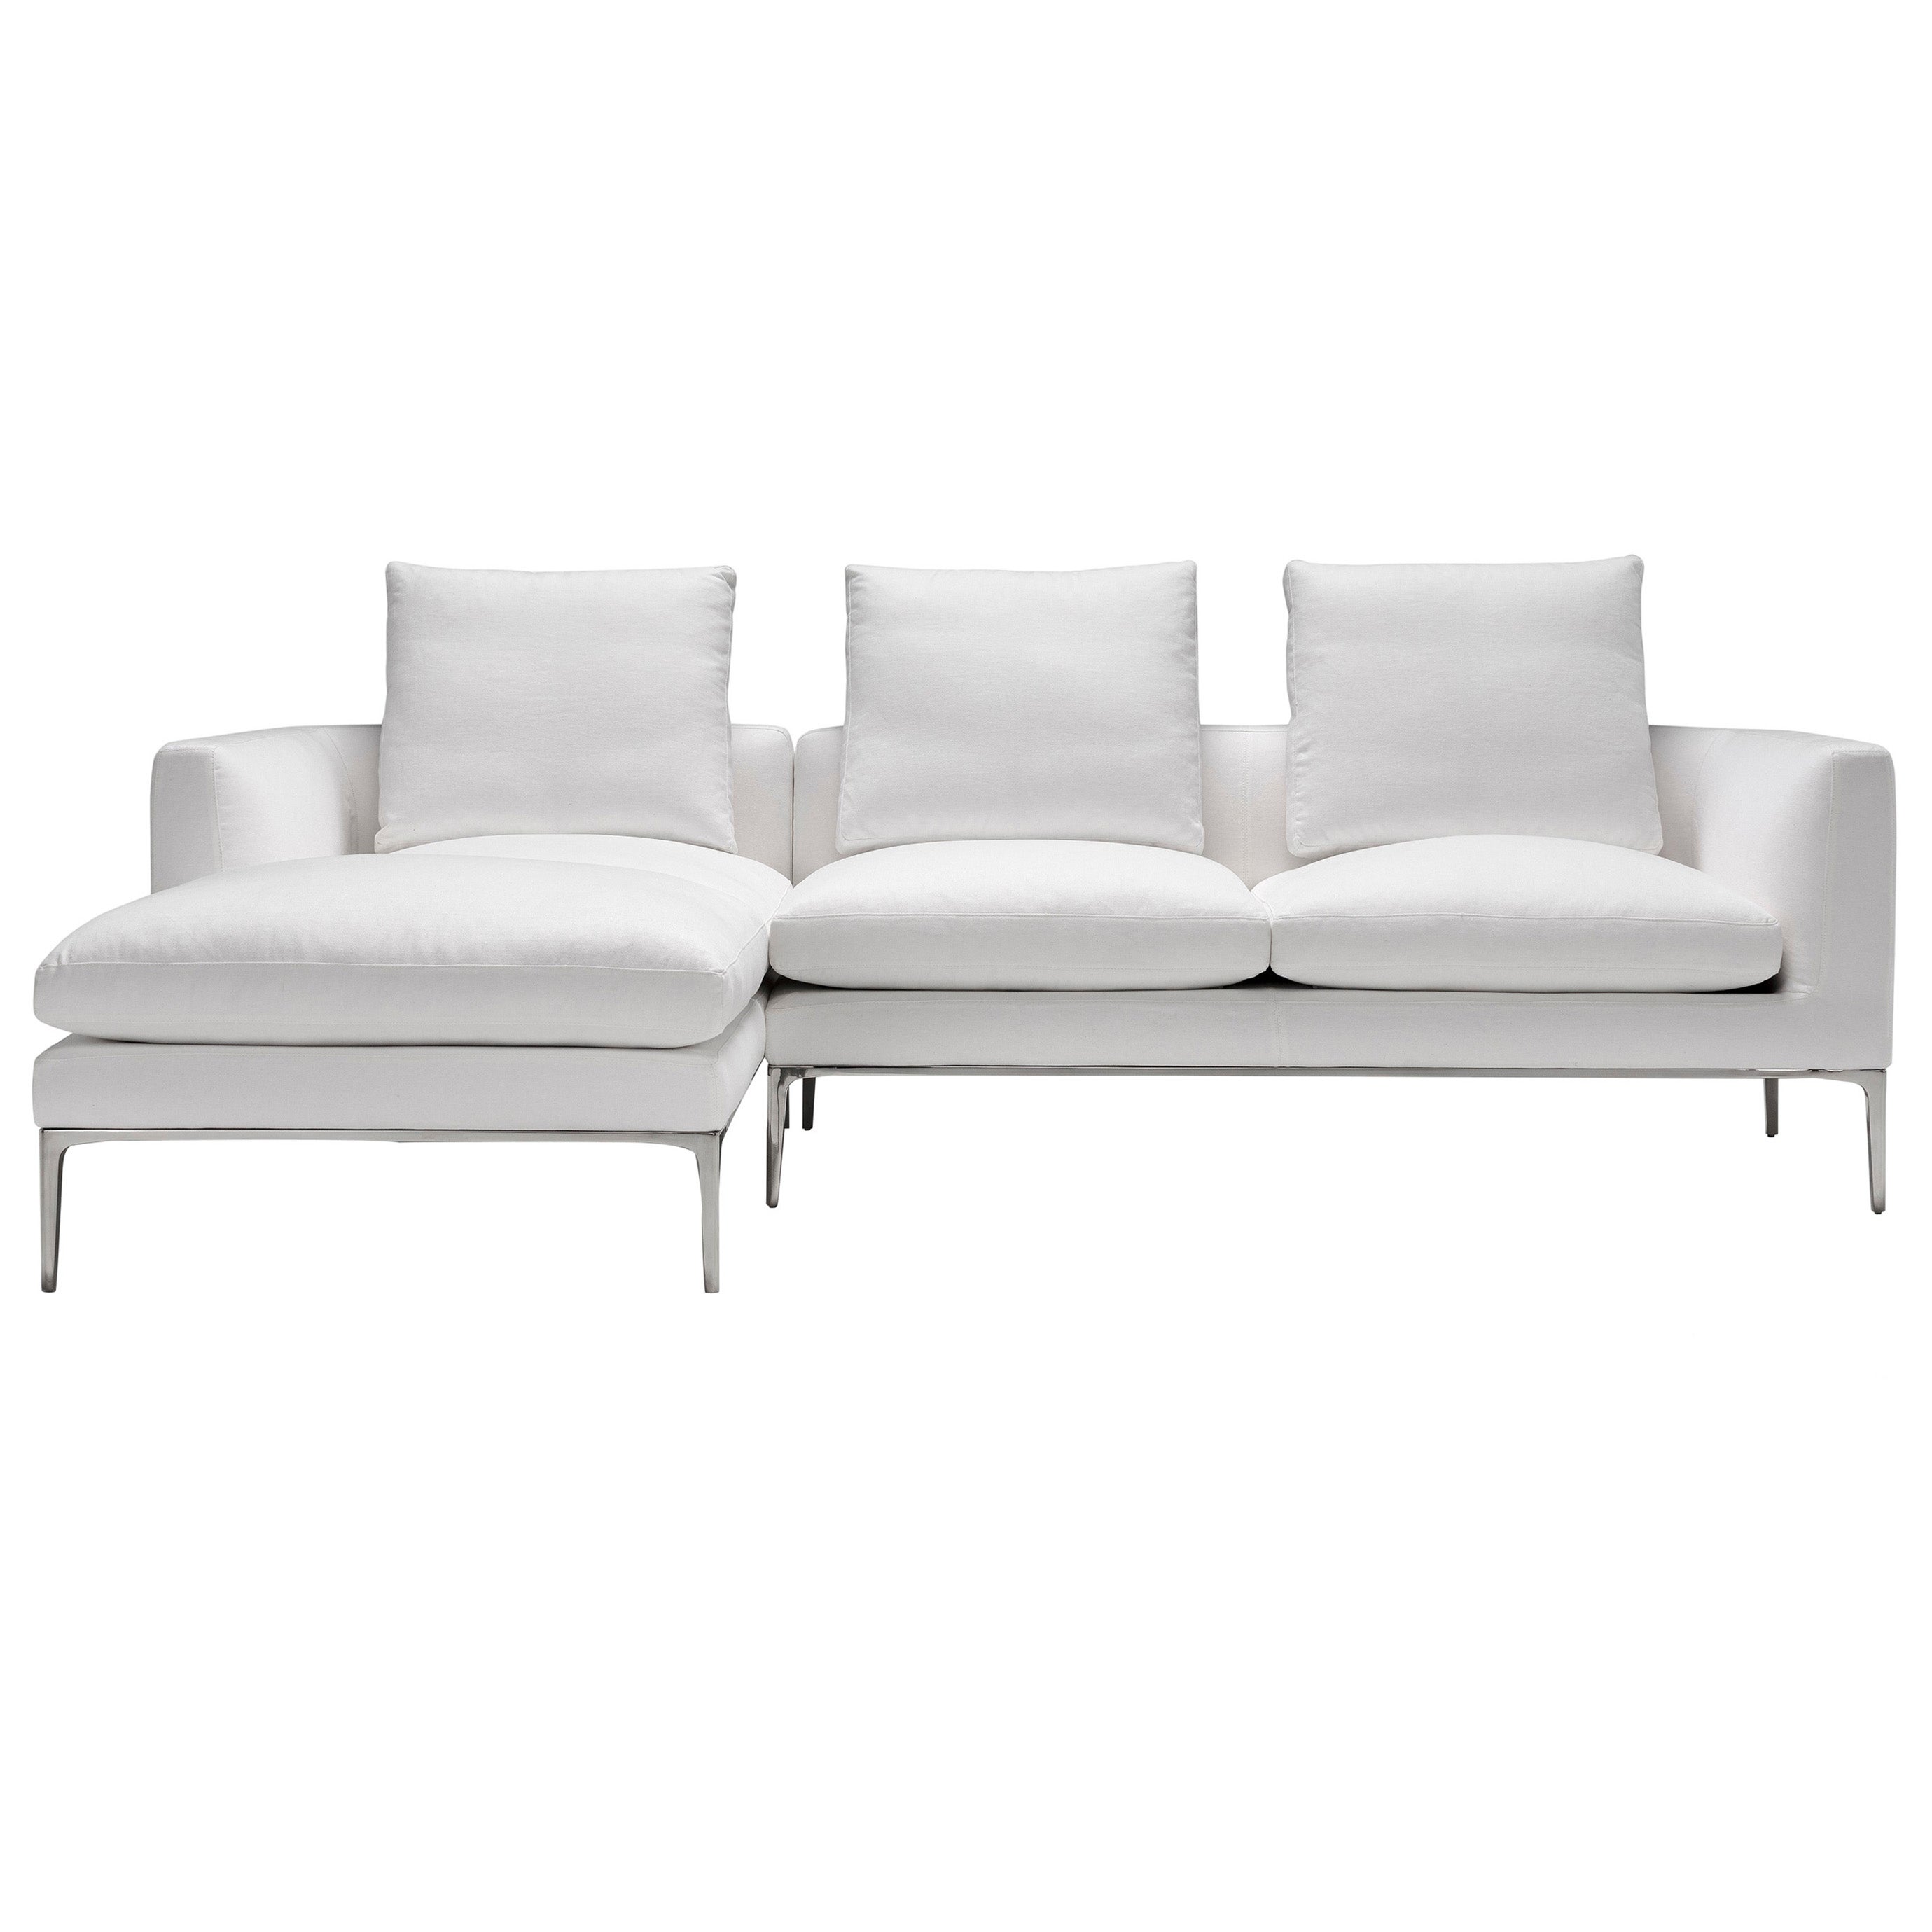 Amura 'Leonard' Chaise Lounge Sofa in White Fabric by Emanuel Gargano For Sale